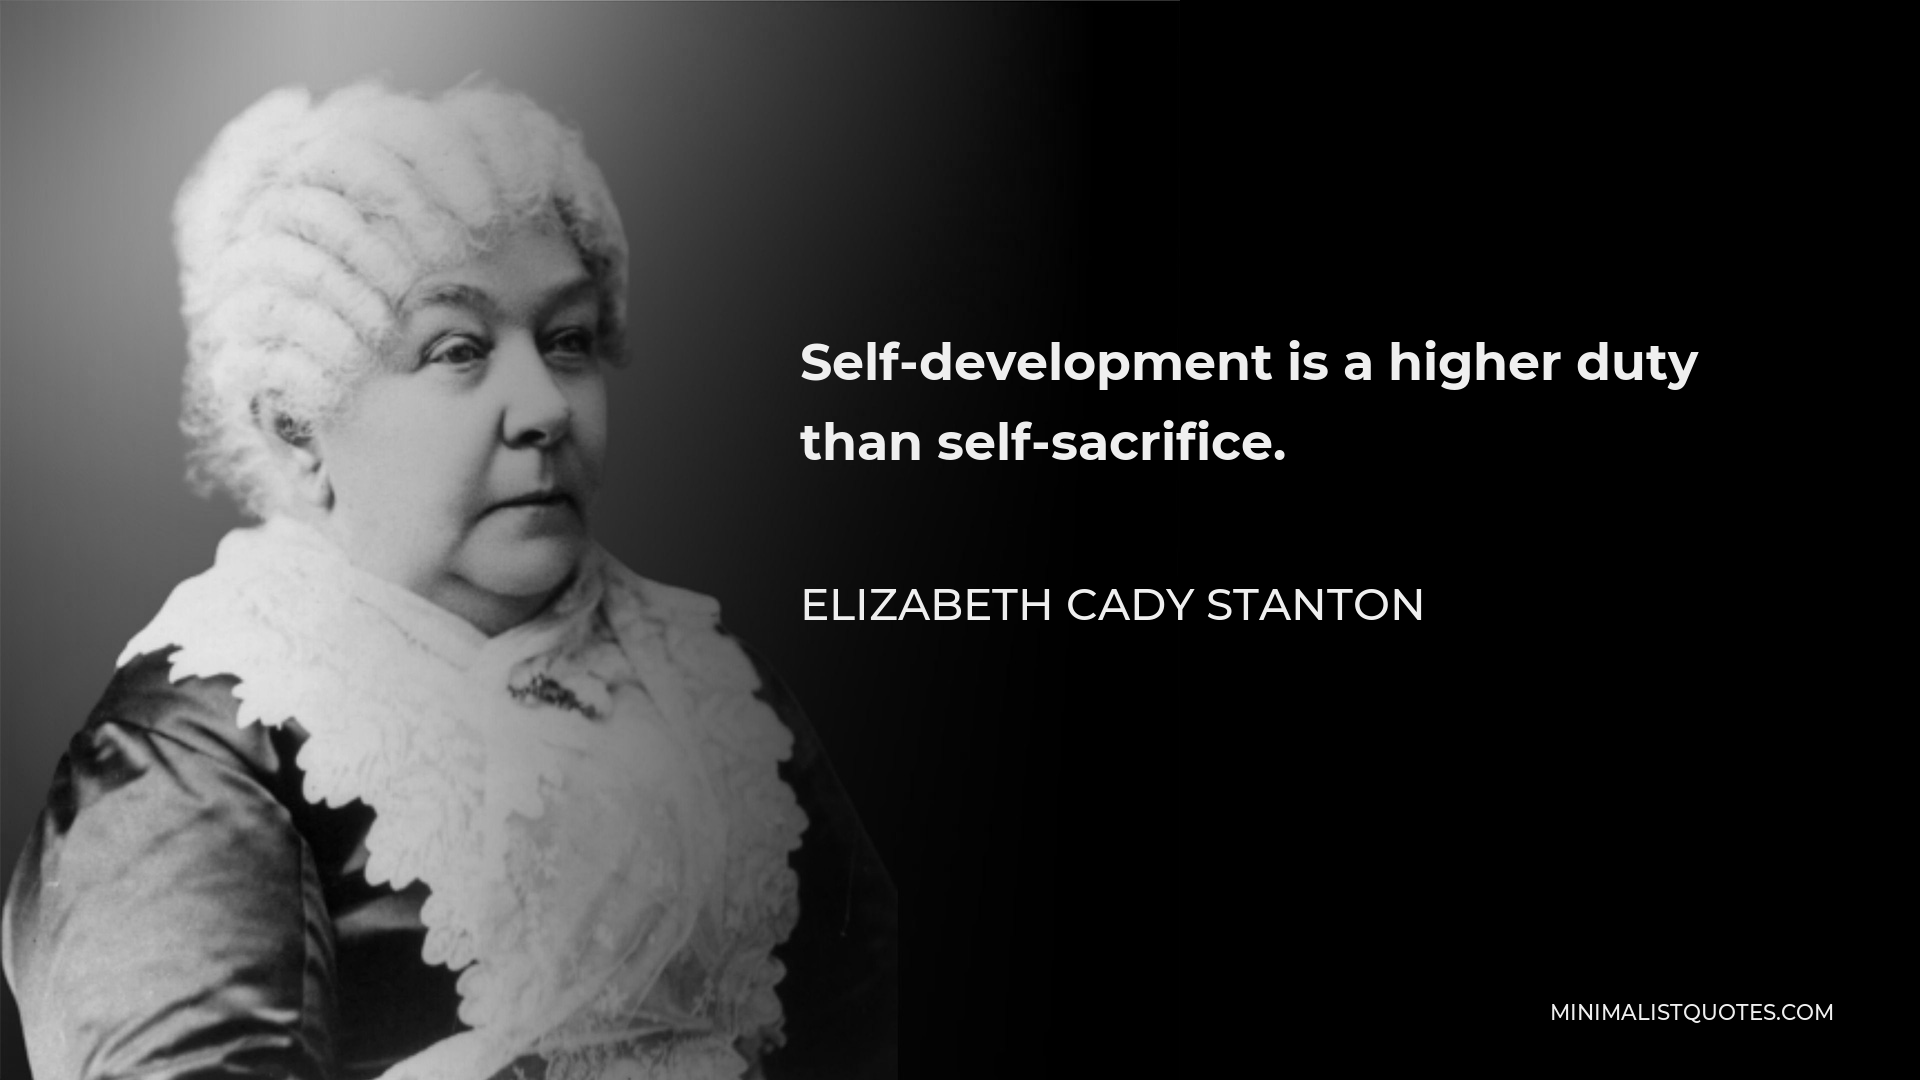 Elizabeth Cady Stanton Quote - Self-development is a higher duty than self-sacrifice.